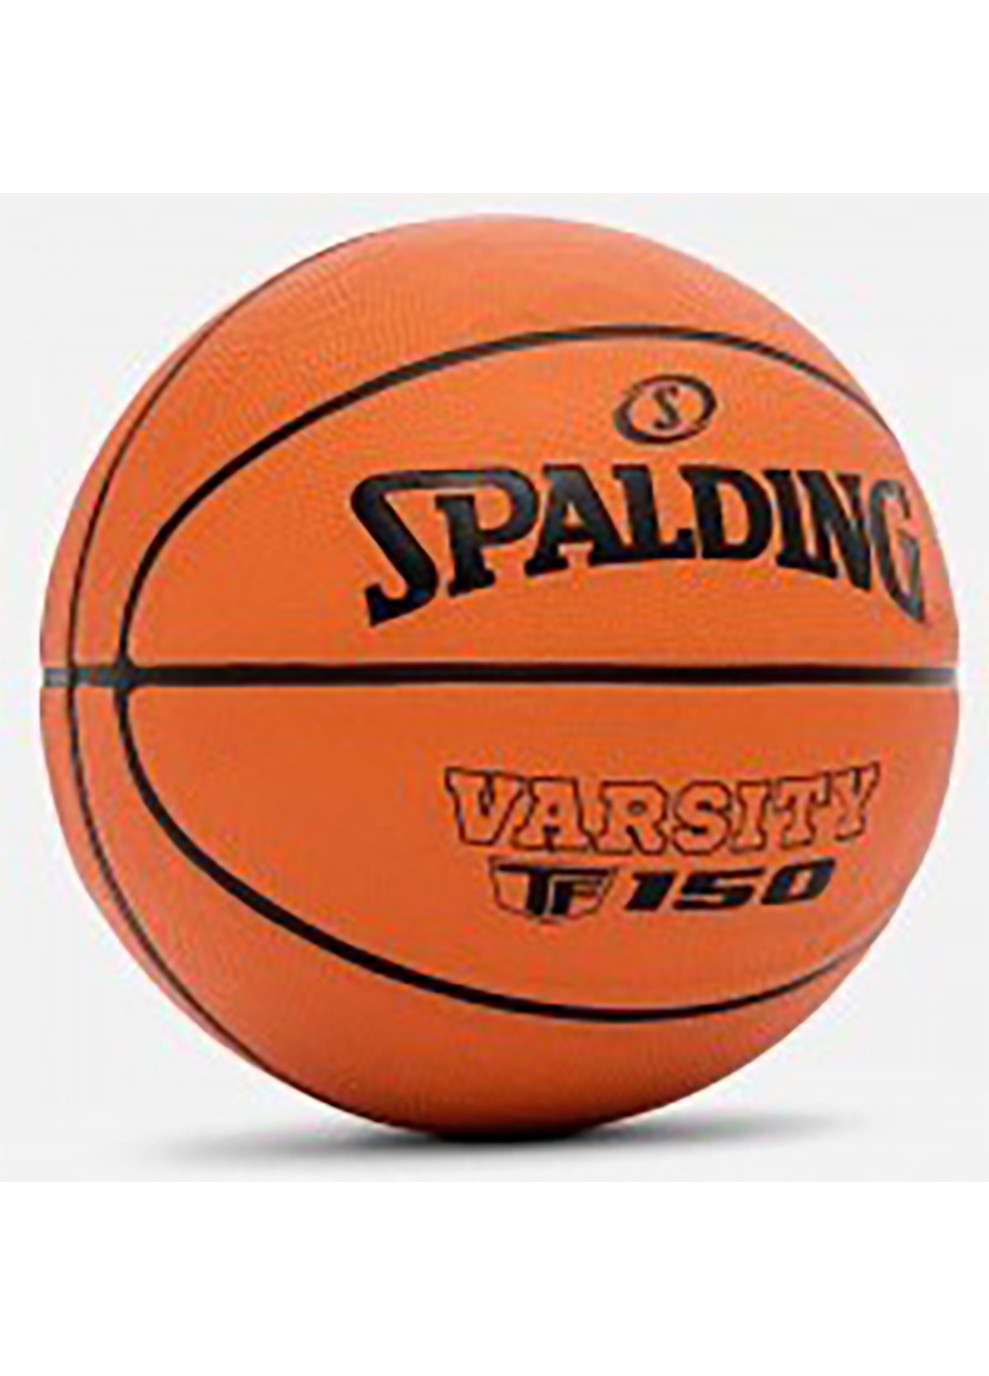 М'яч баскетбольний Varsity TF-150 FIBA помаранчевий Spalding (260633771)